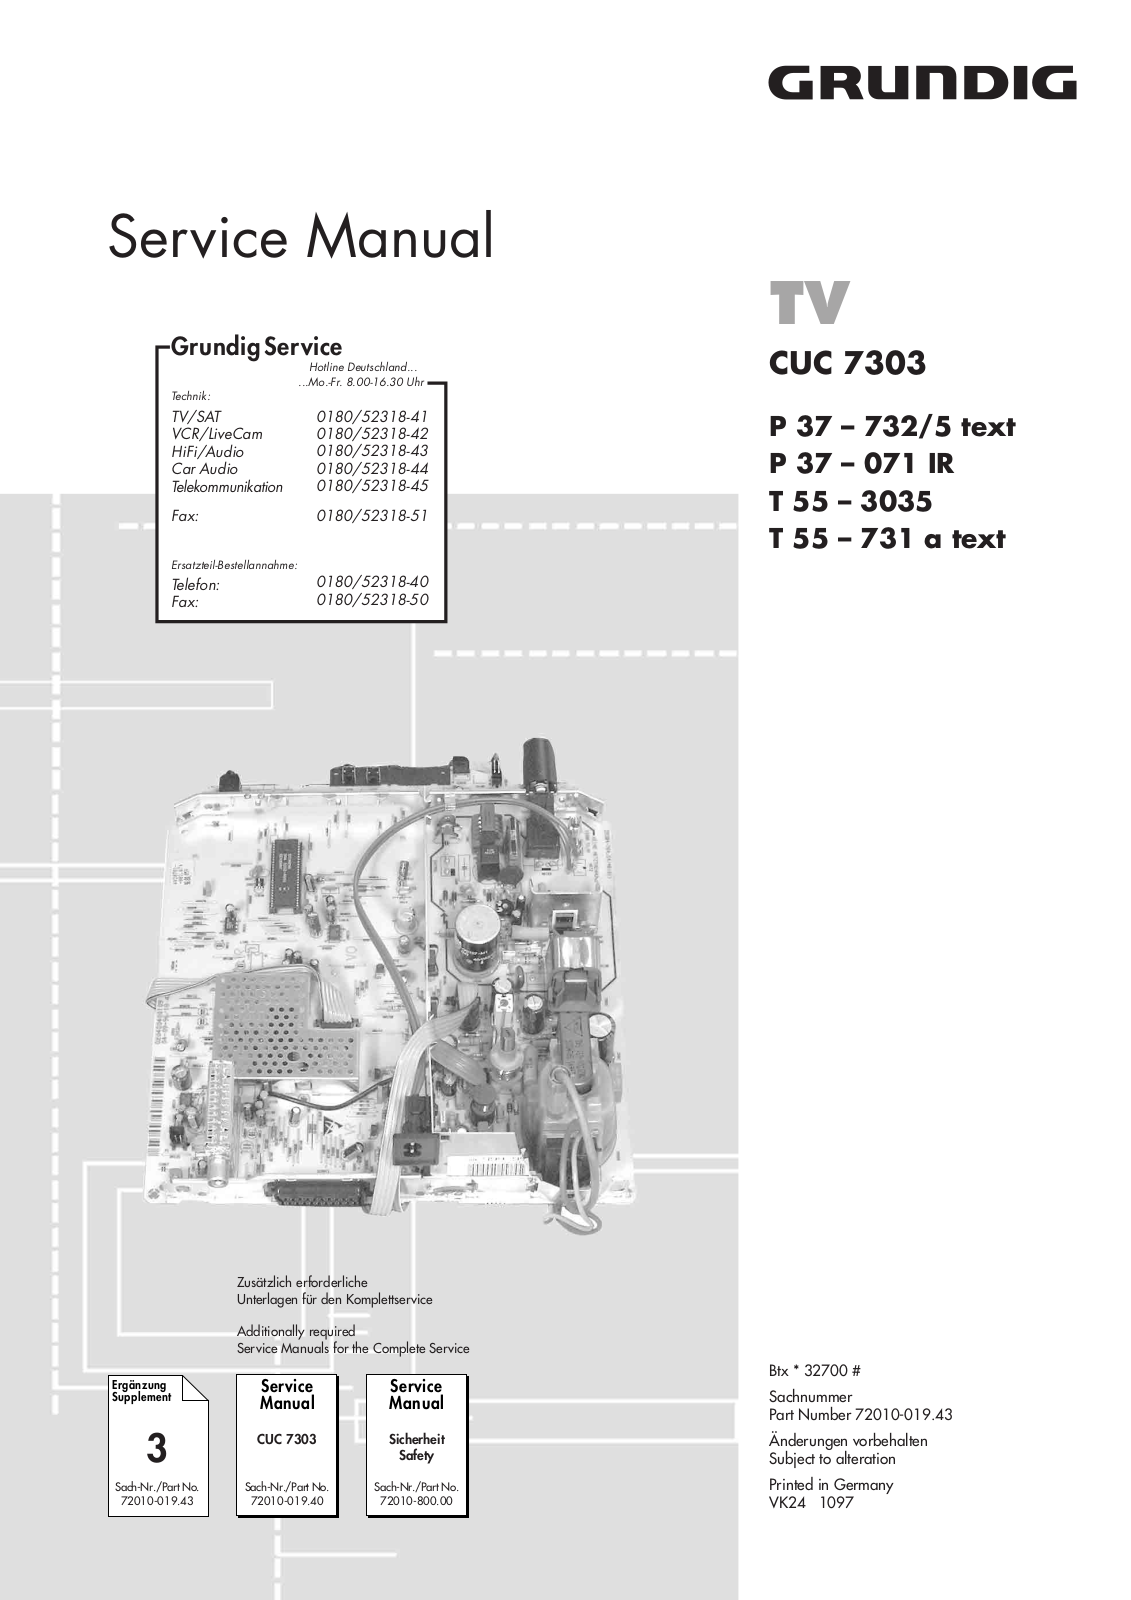 Grundig P 37 – 071 IR, T 55 – 731 a, T 55 – 3035, P 37 – 732-5 Service Manual